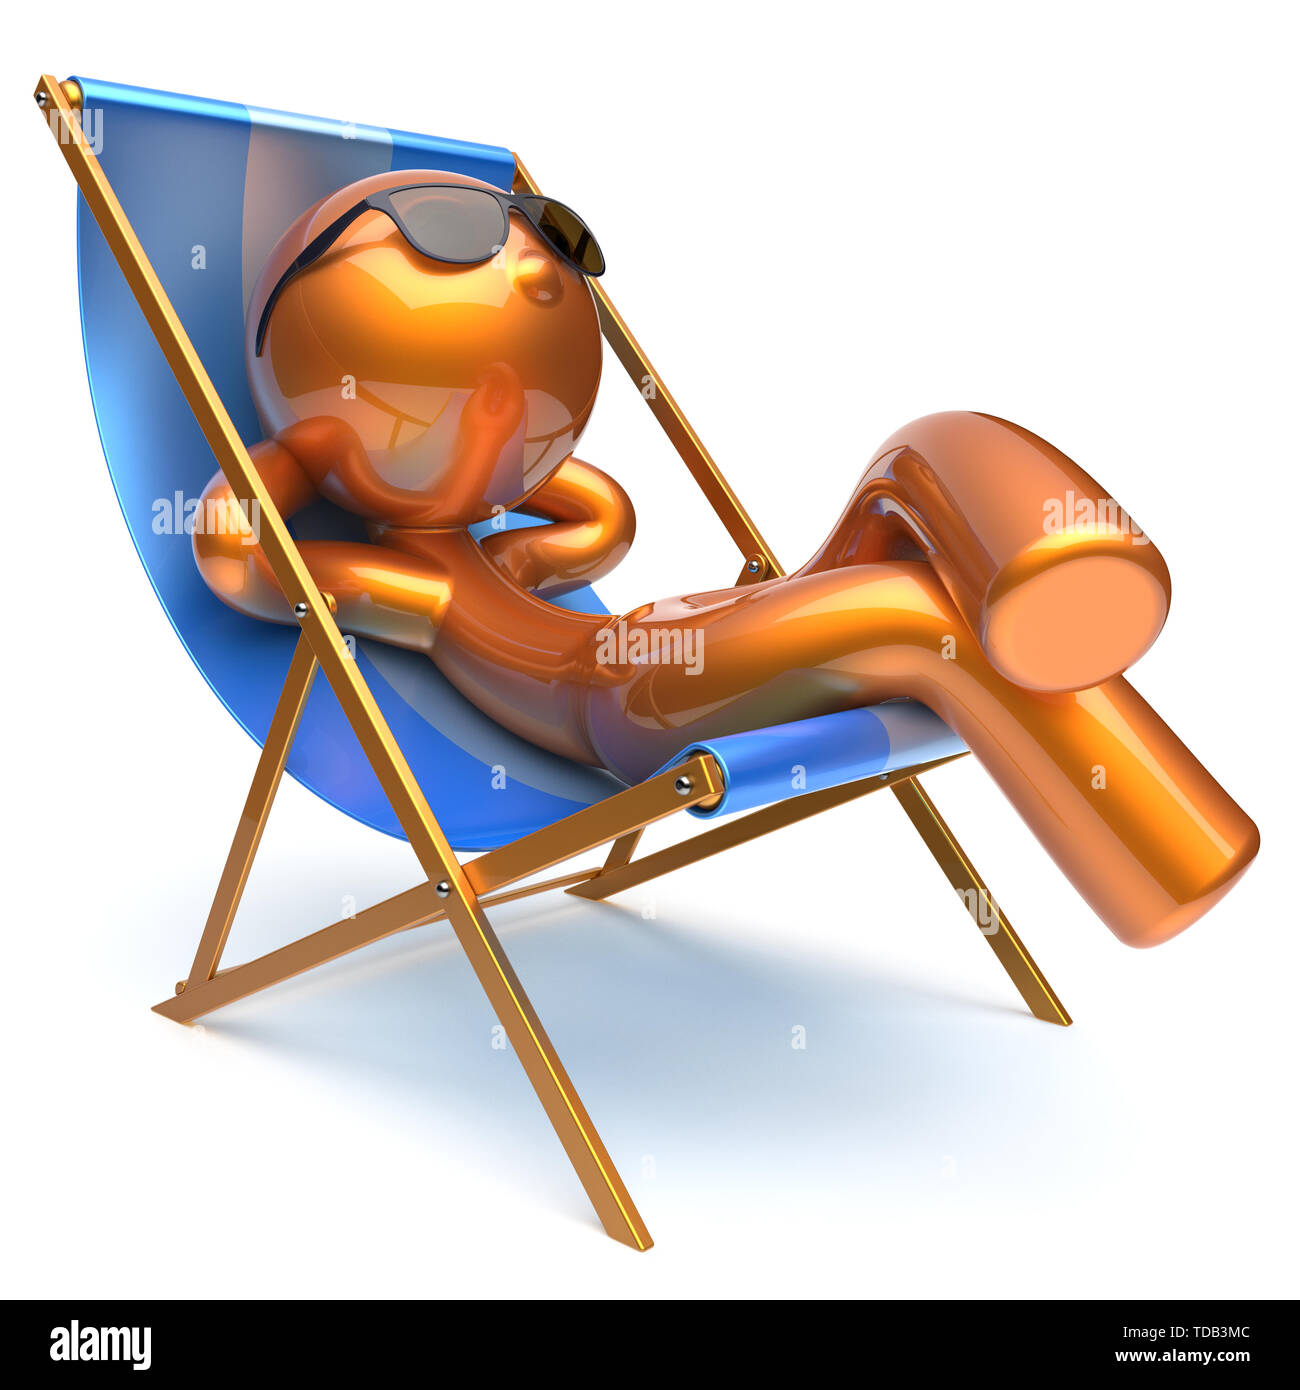 Man carefree relaxing chilling beach deck chair sunglasses summer outdoor  comfort cartoon stylized golden character sun lounger chaise lounge  sunbathi Stock Photo - Alamy